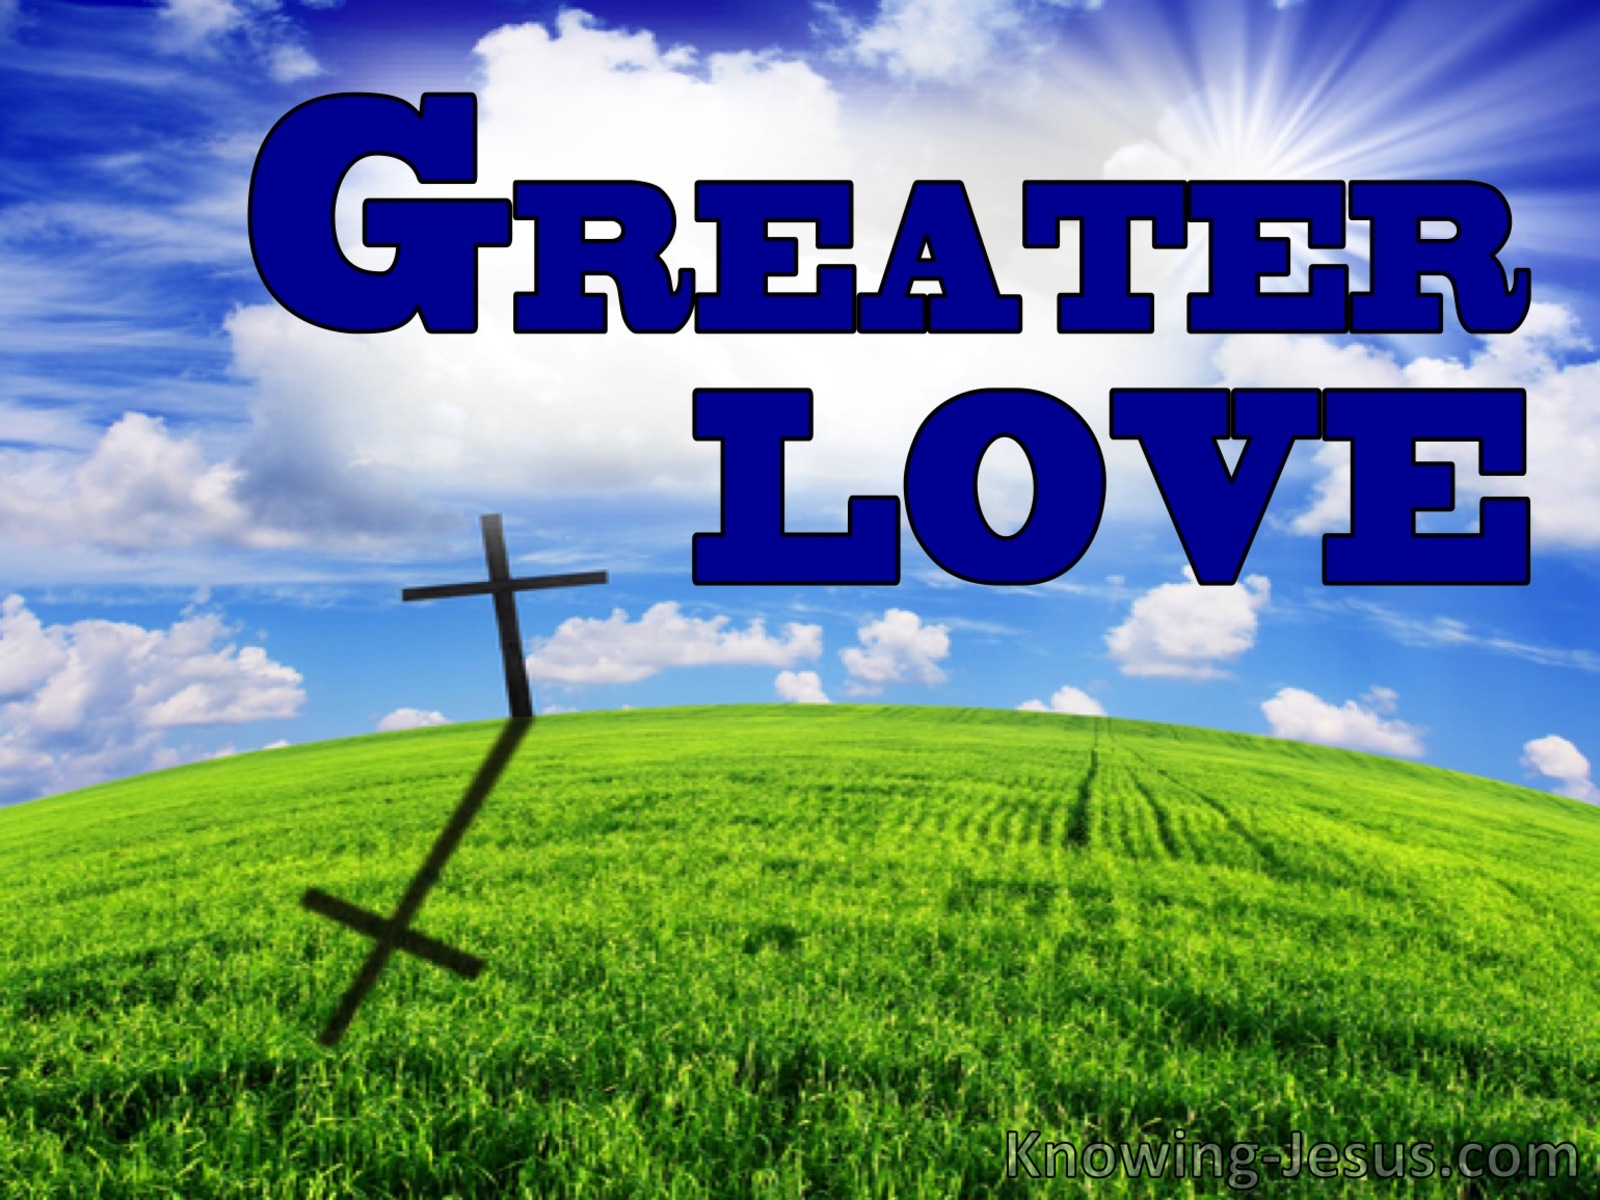 John 15:30 Greater Love (devotional)11:05 (blue)